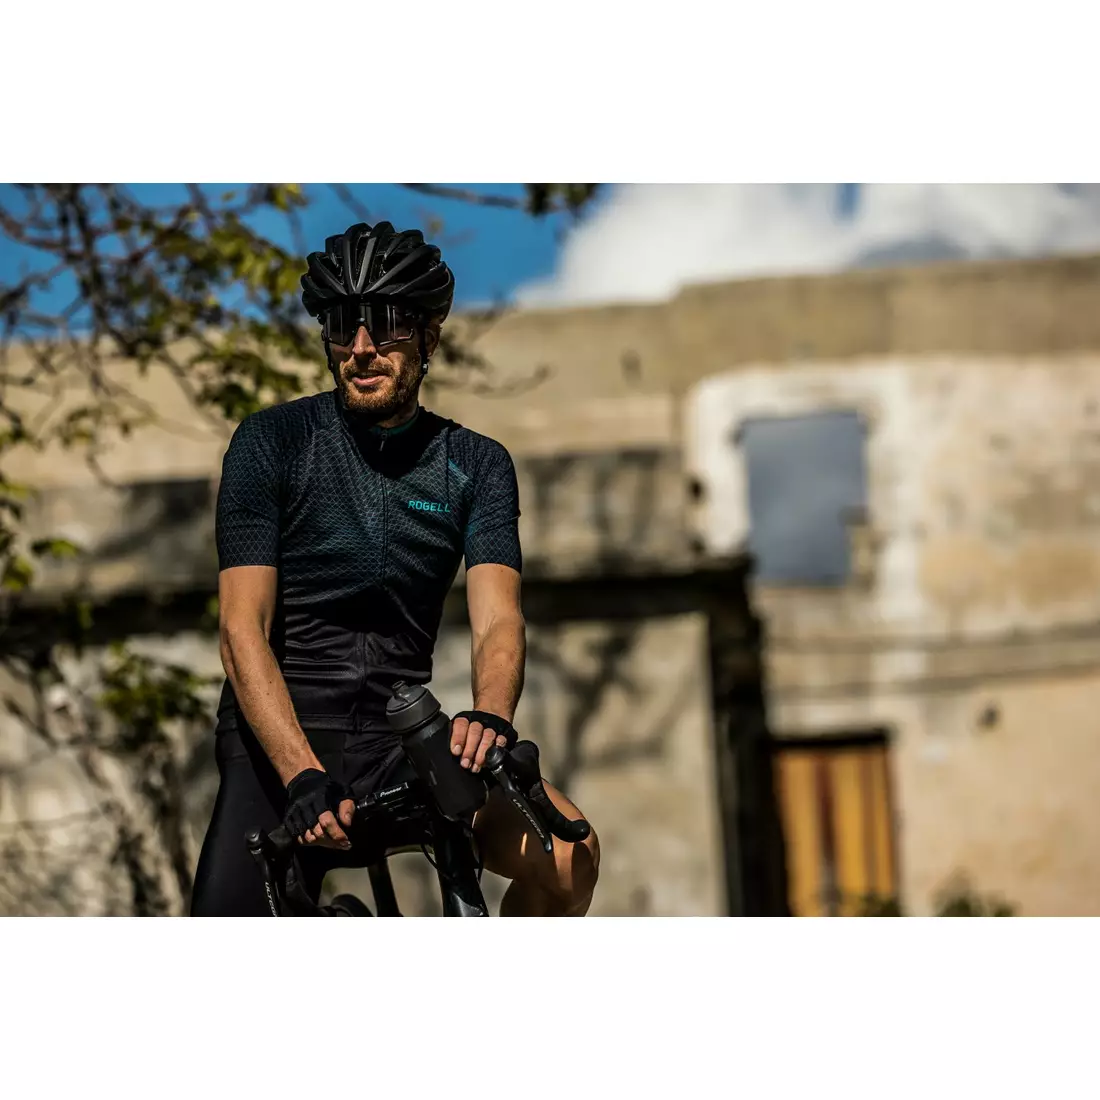 ROGELLI men's bicycle t-shirt WEAVE black/green 001.331